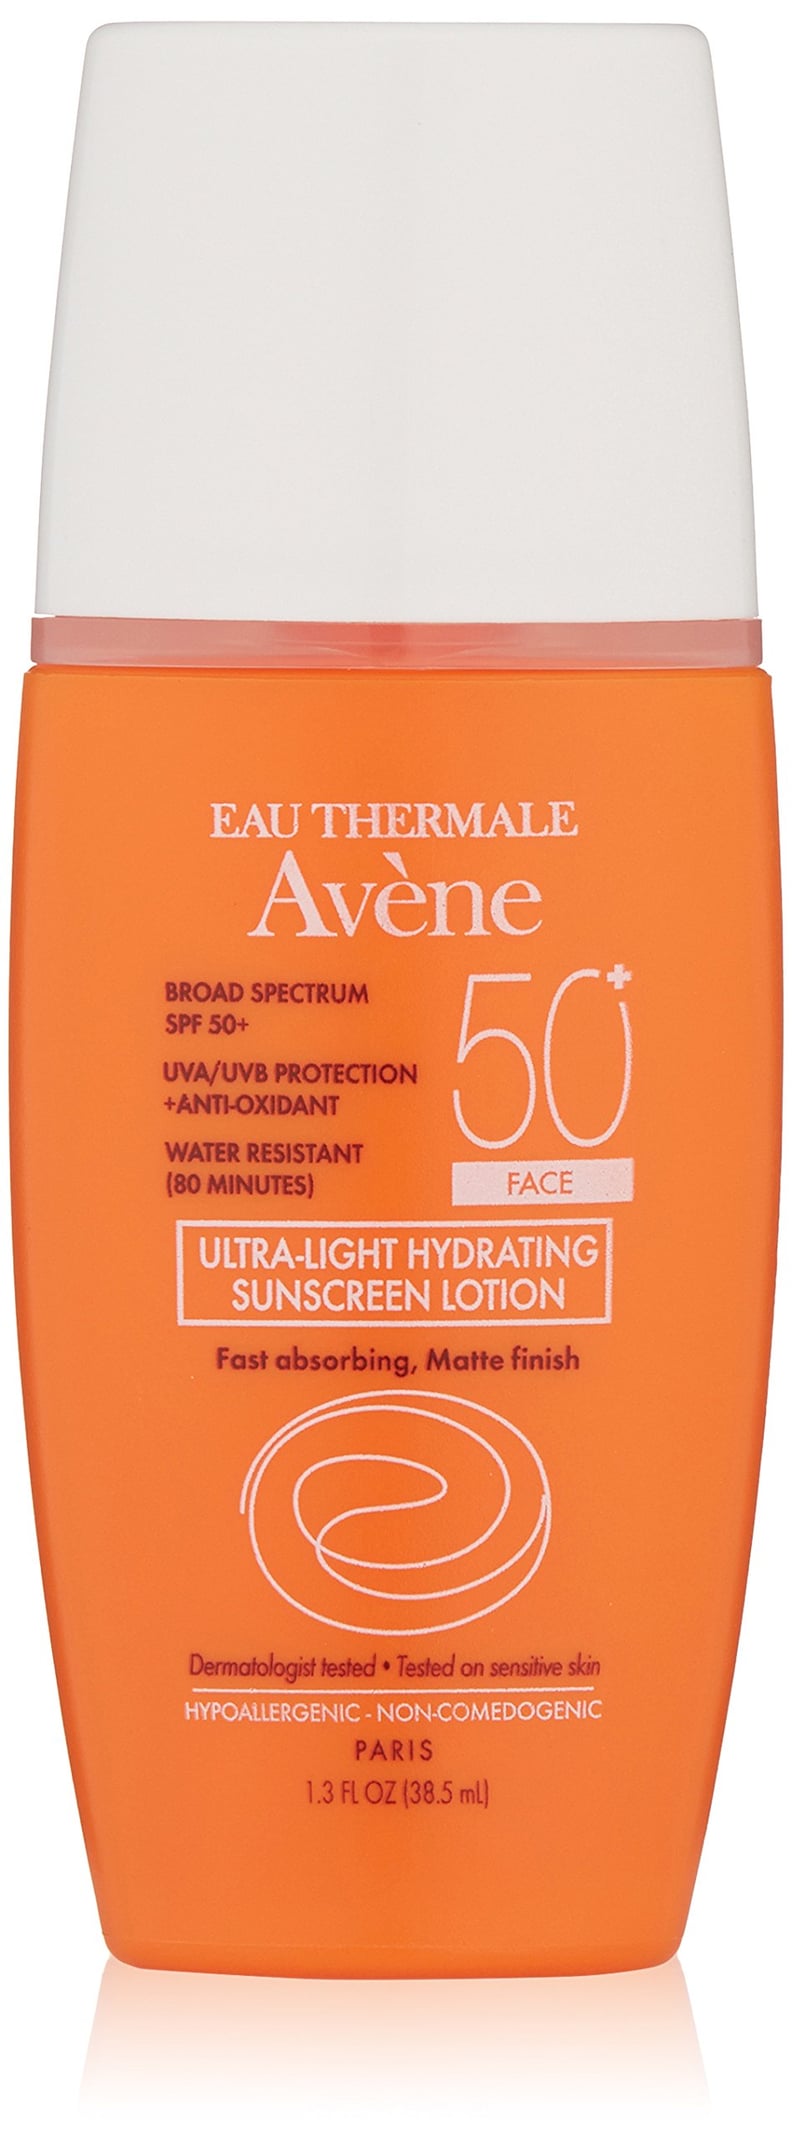 Avène Ultralight Hydrating Sunscreen Lotion SPF 50+